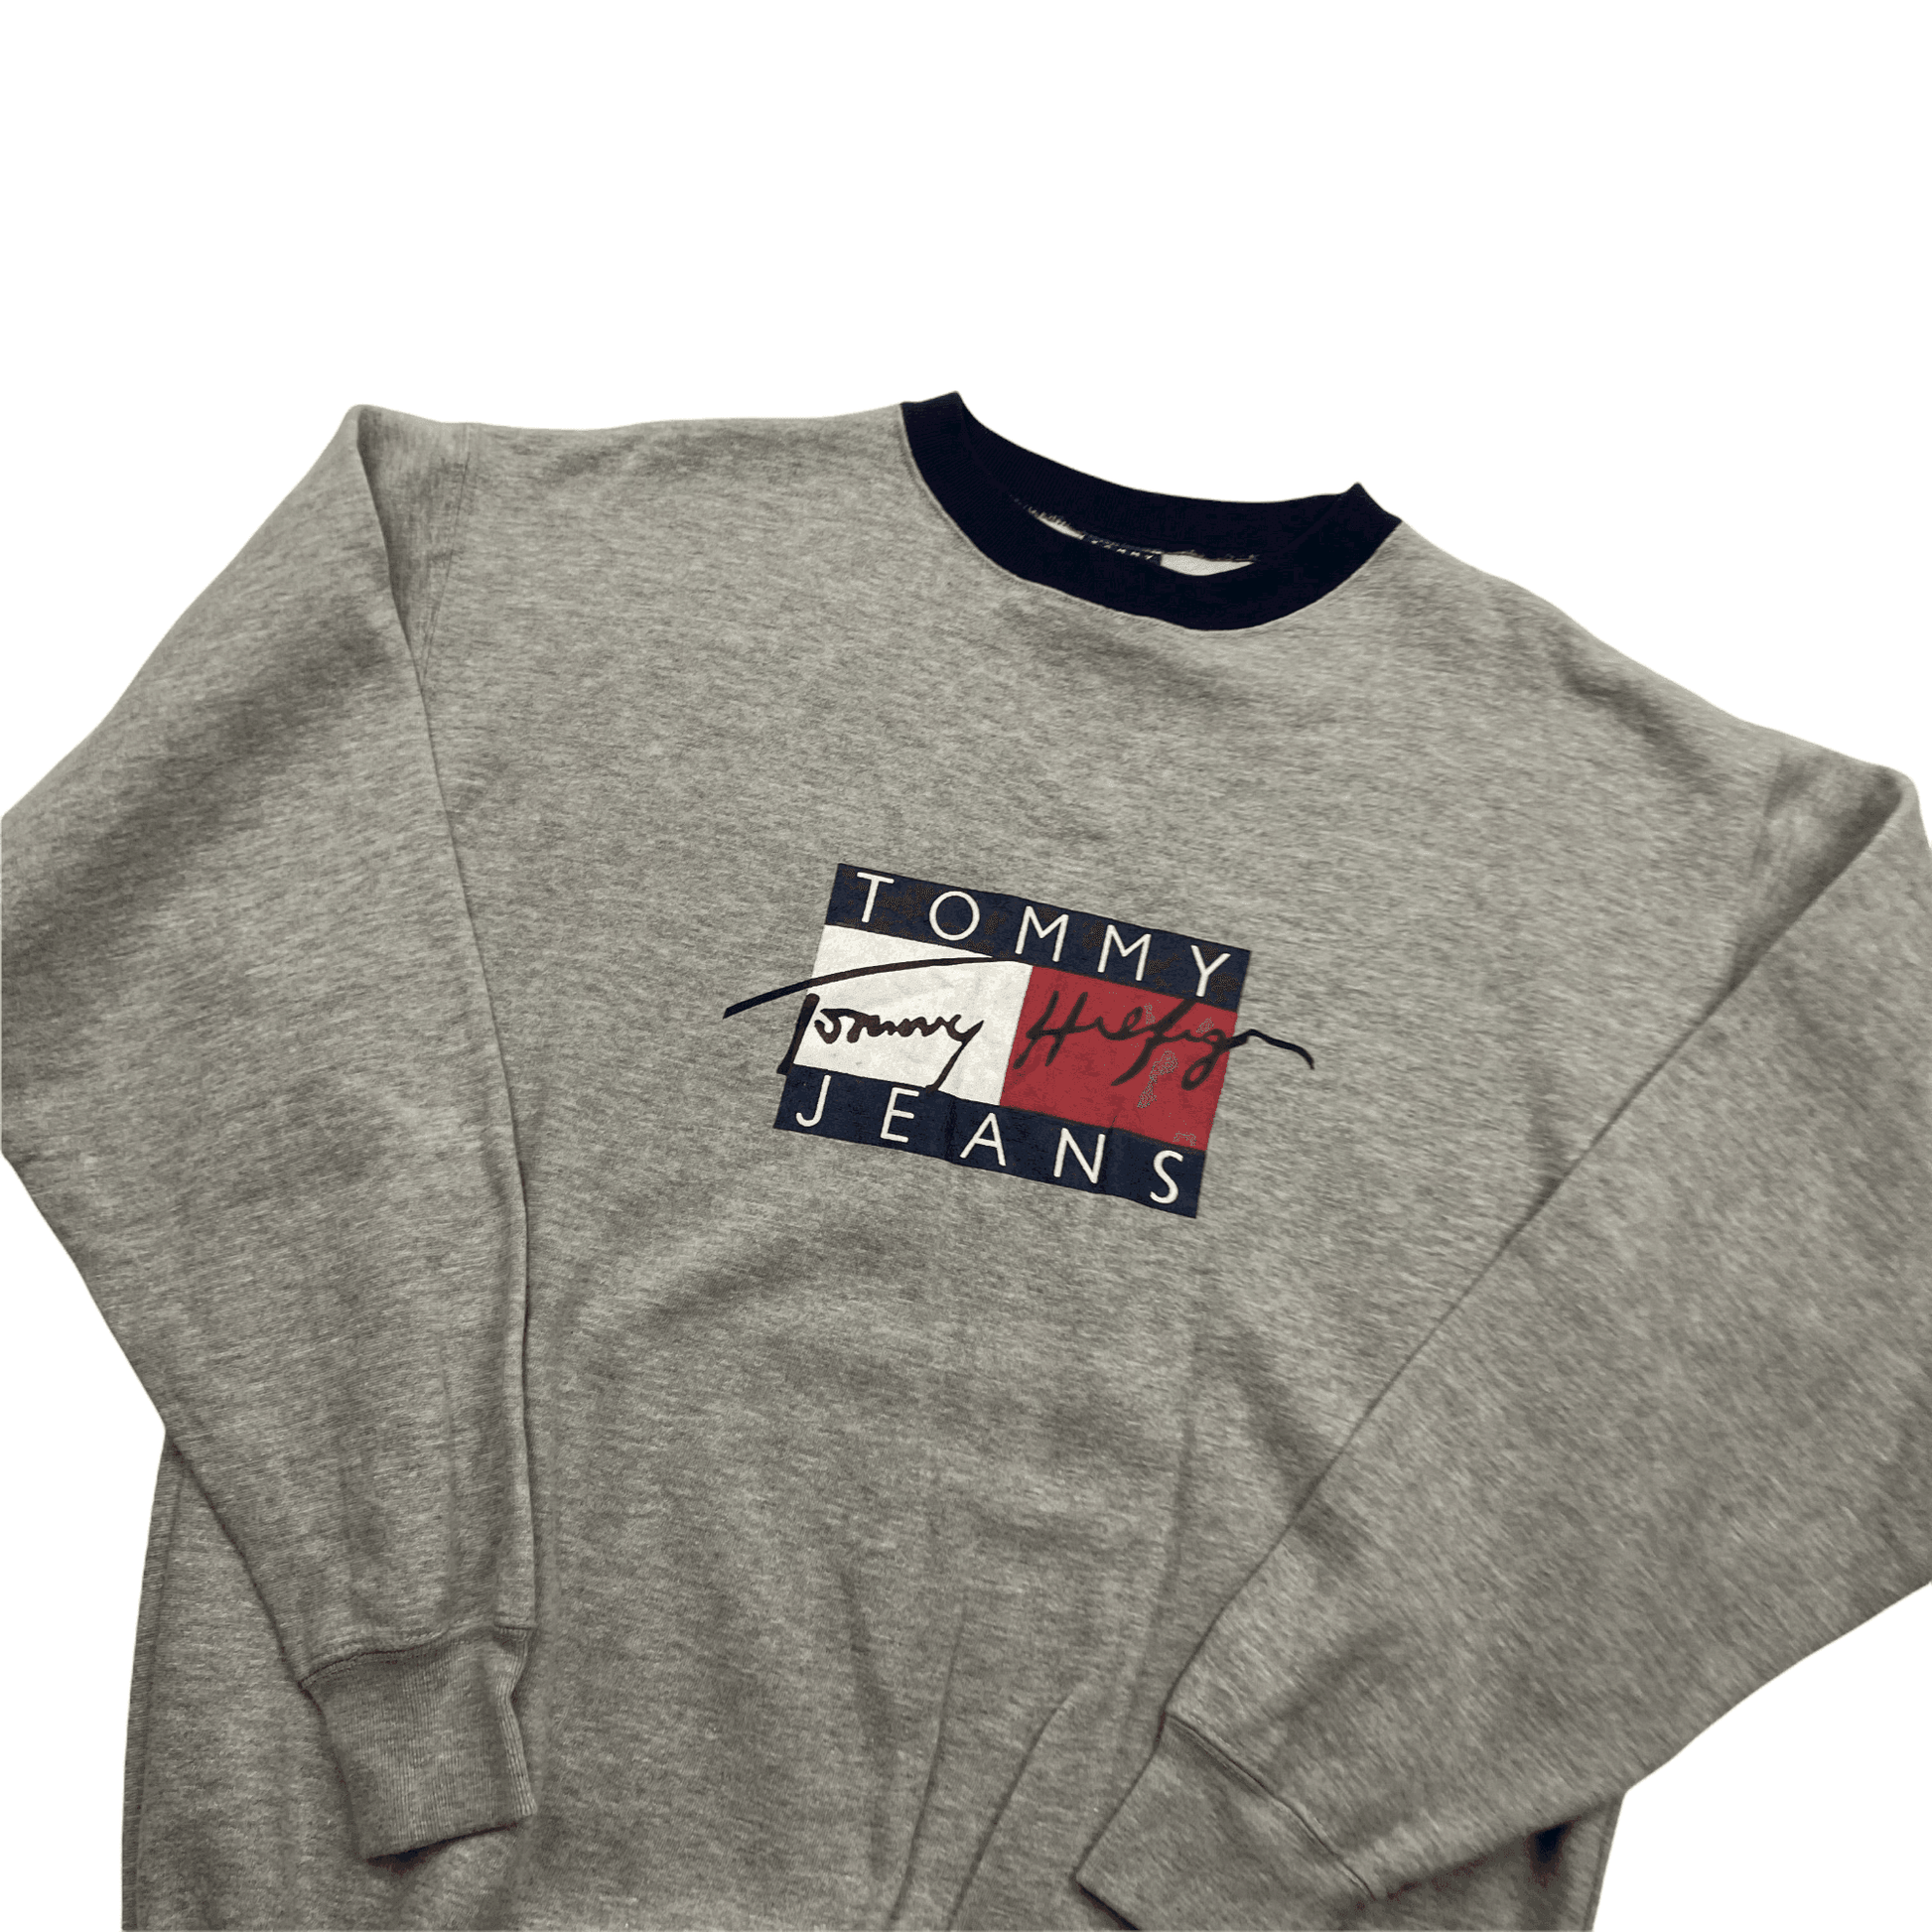 Vintage 90s Grey Tommy Hilfiger Jeans Spell-Out Sweatshirt - Large - The Streetwear Studio